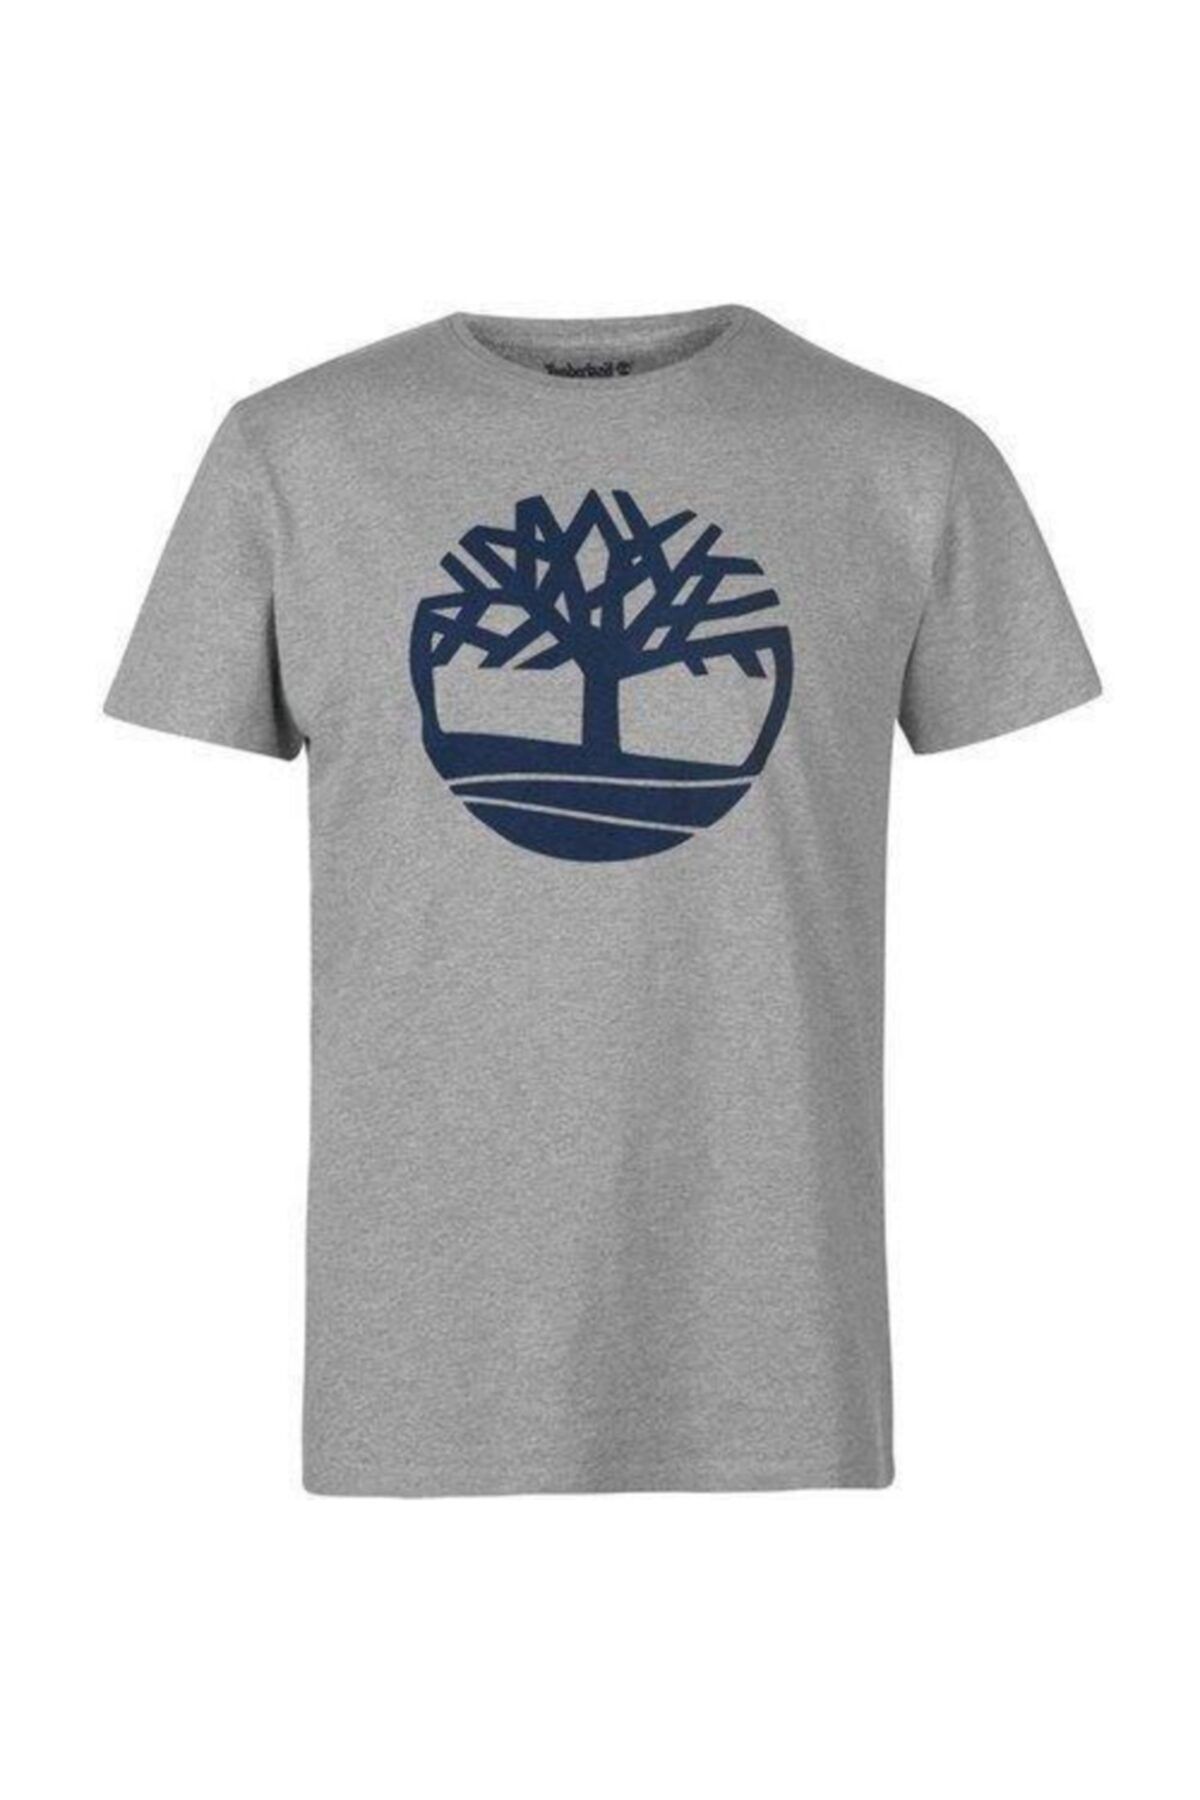 Timberland SS KENNEBEC RIVER TREE LO Gri Erkek T-Shirt 101096728